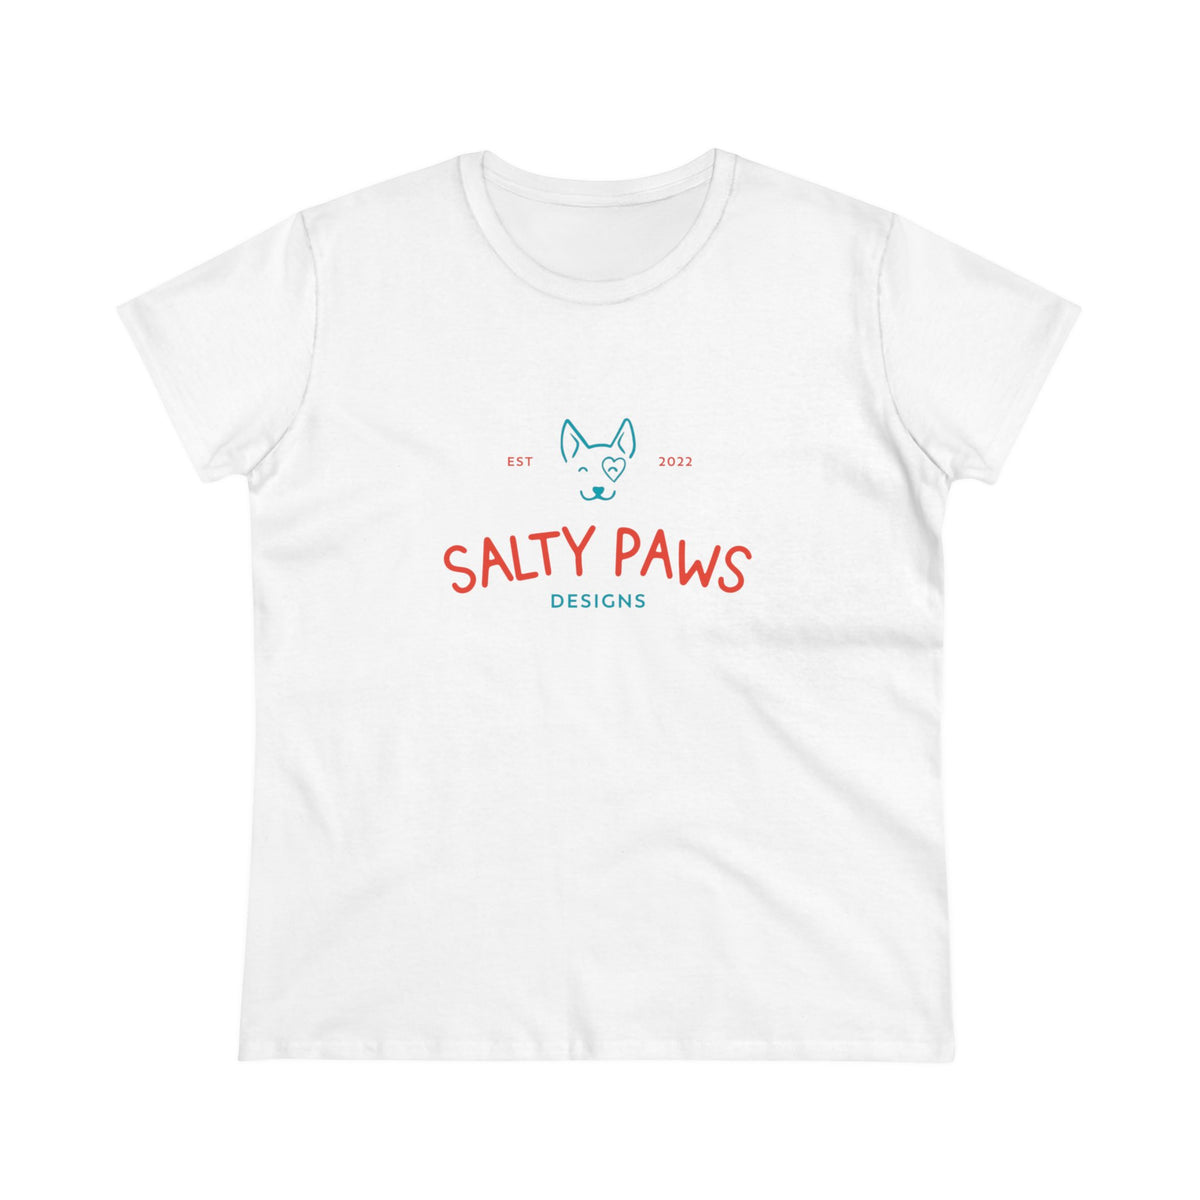 Salty Paws Designs Women's T-Shirt (colour logo)